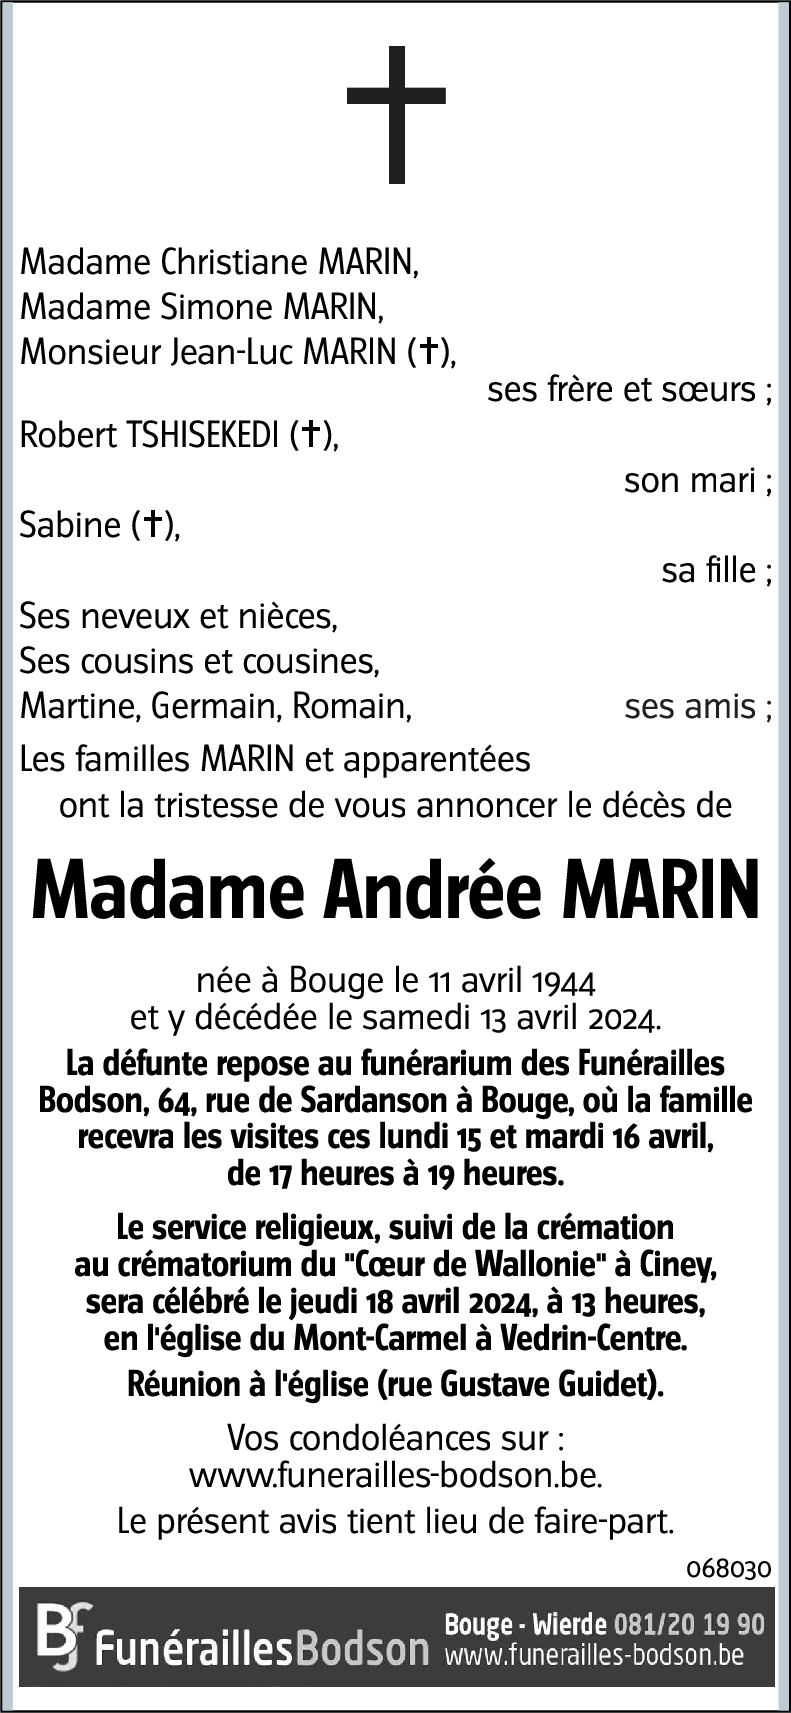 Andrée MARIN